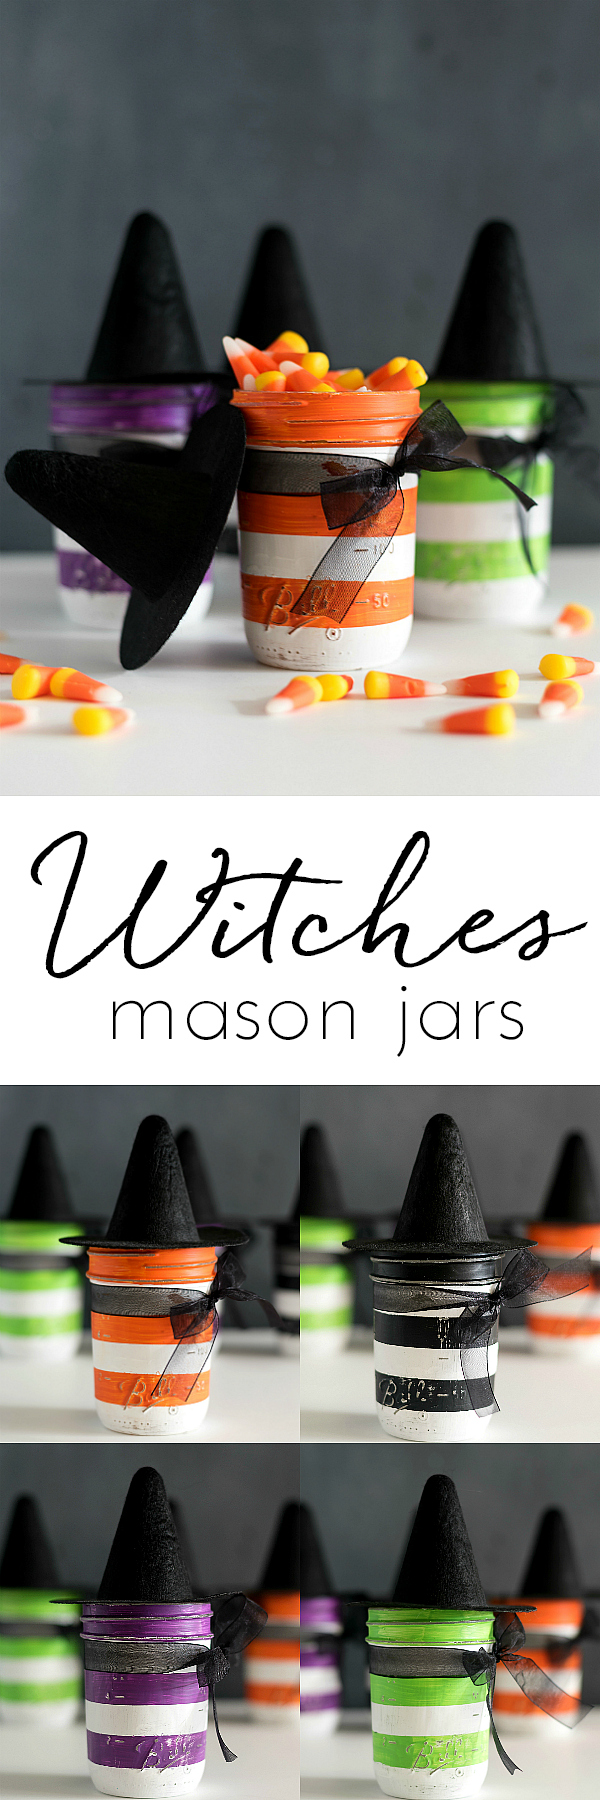 Witch Mason Jars - Witches Mason Jars - Halloween Mason Jars - Mini Witch Hat Mason Jars for Halloween - Mason Jar Crafts for Halloween @masonjarcraftslove.com